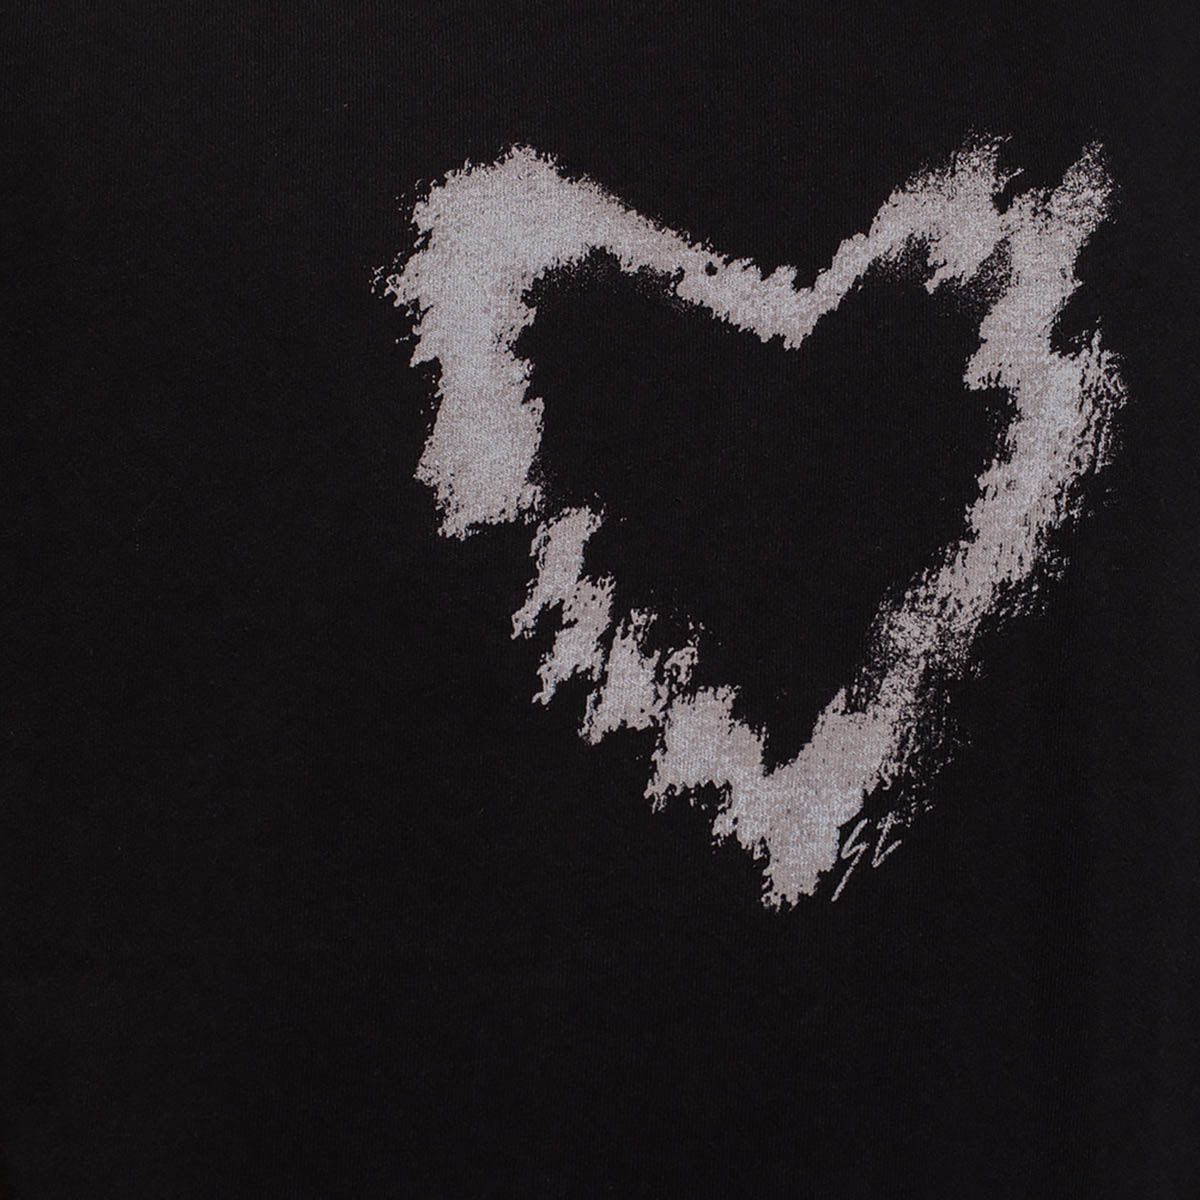 Abstract Heart Print T-Shirt